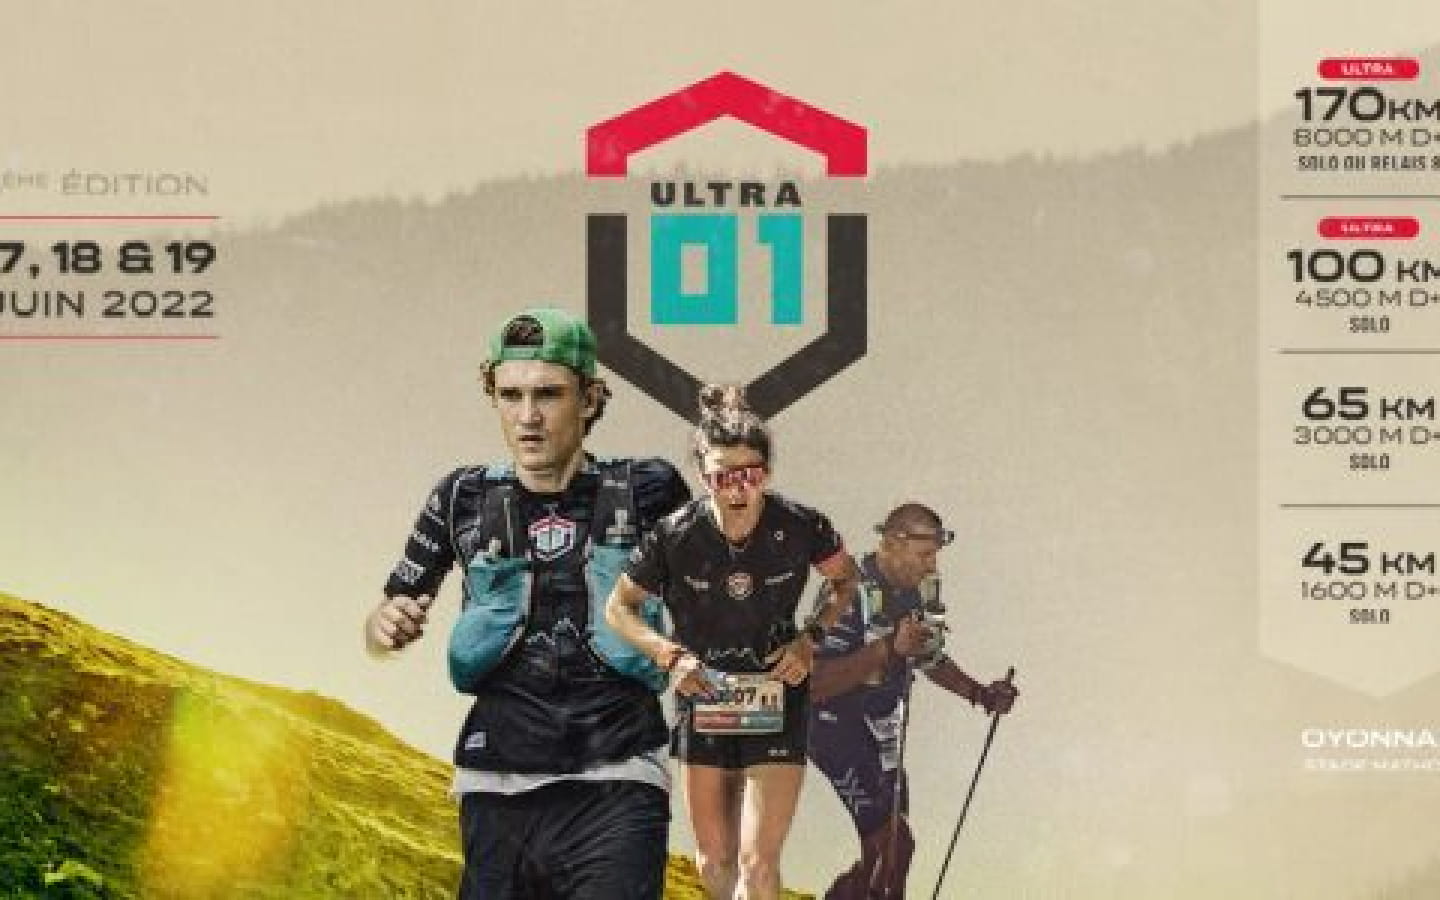 Ultra 01 - 65km by Pays de Gex agglo